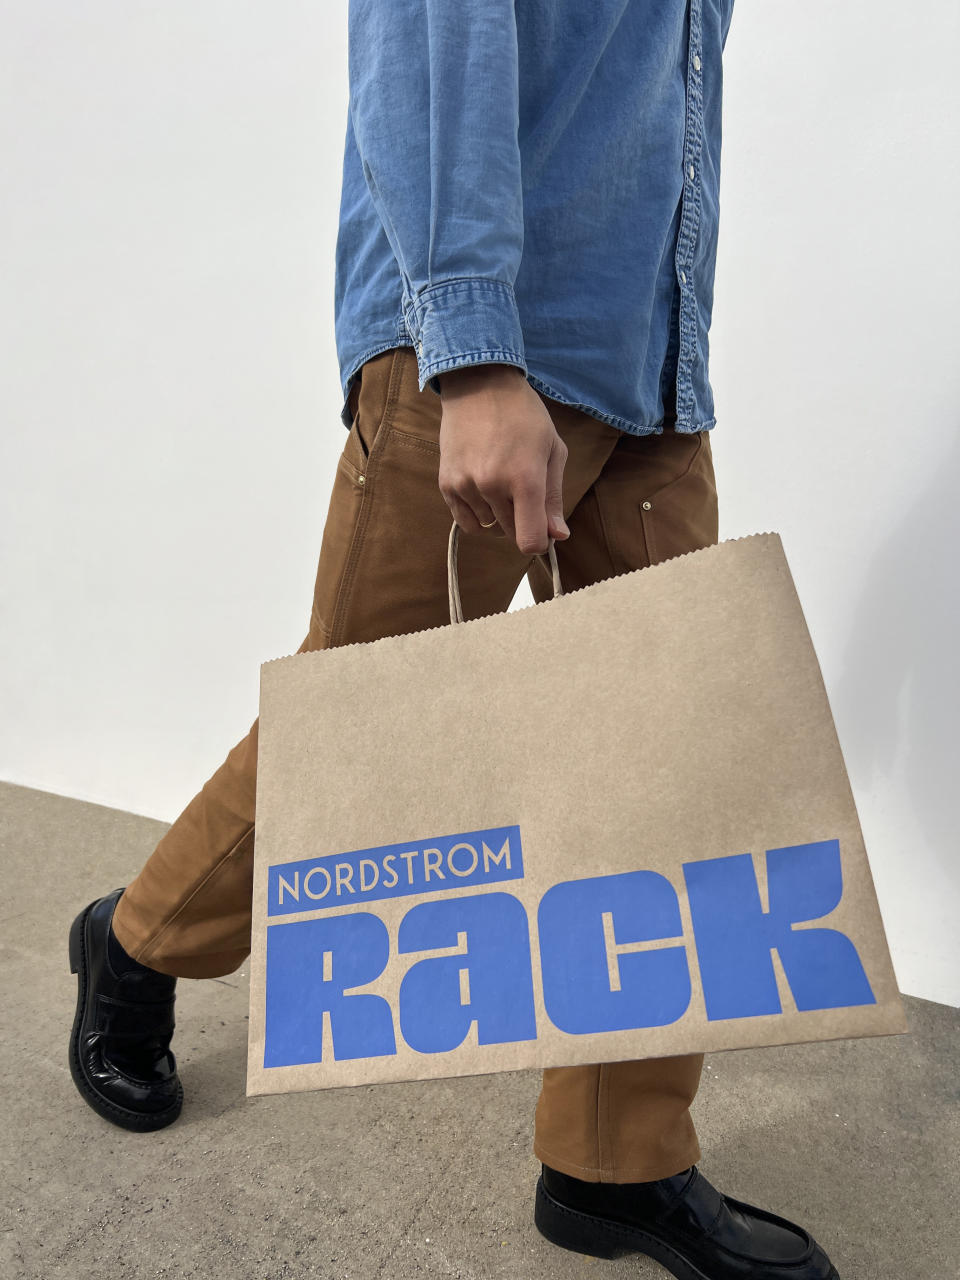 The updated Nordstrom Rack logo.